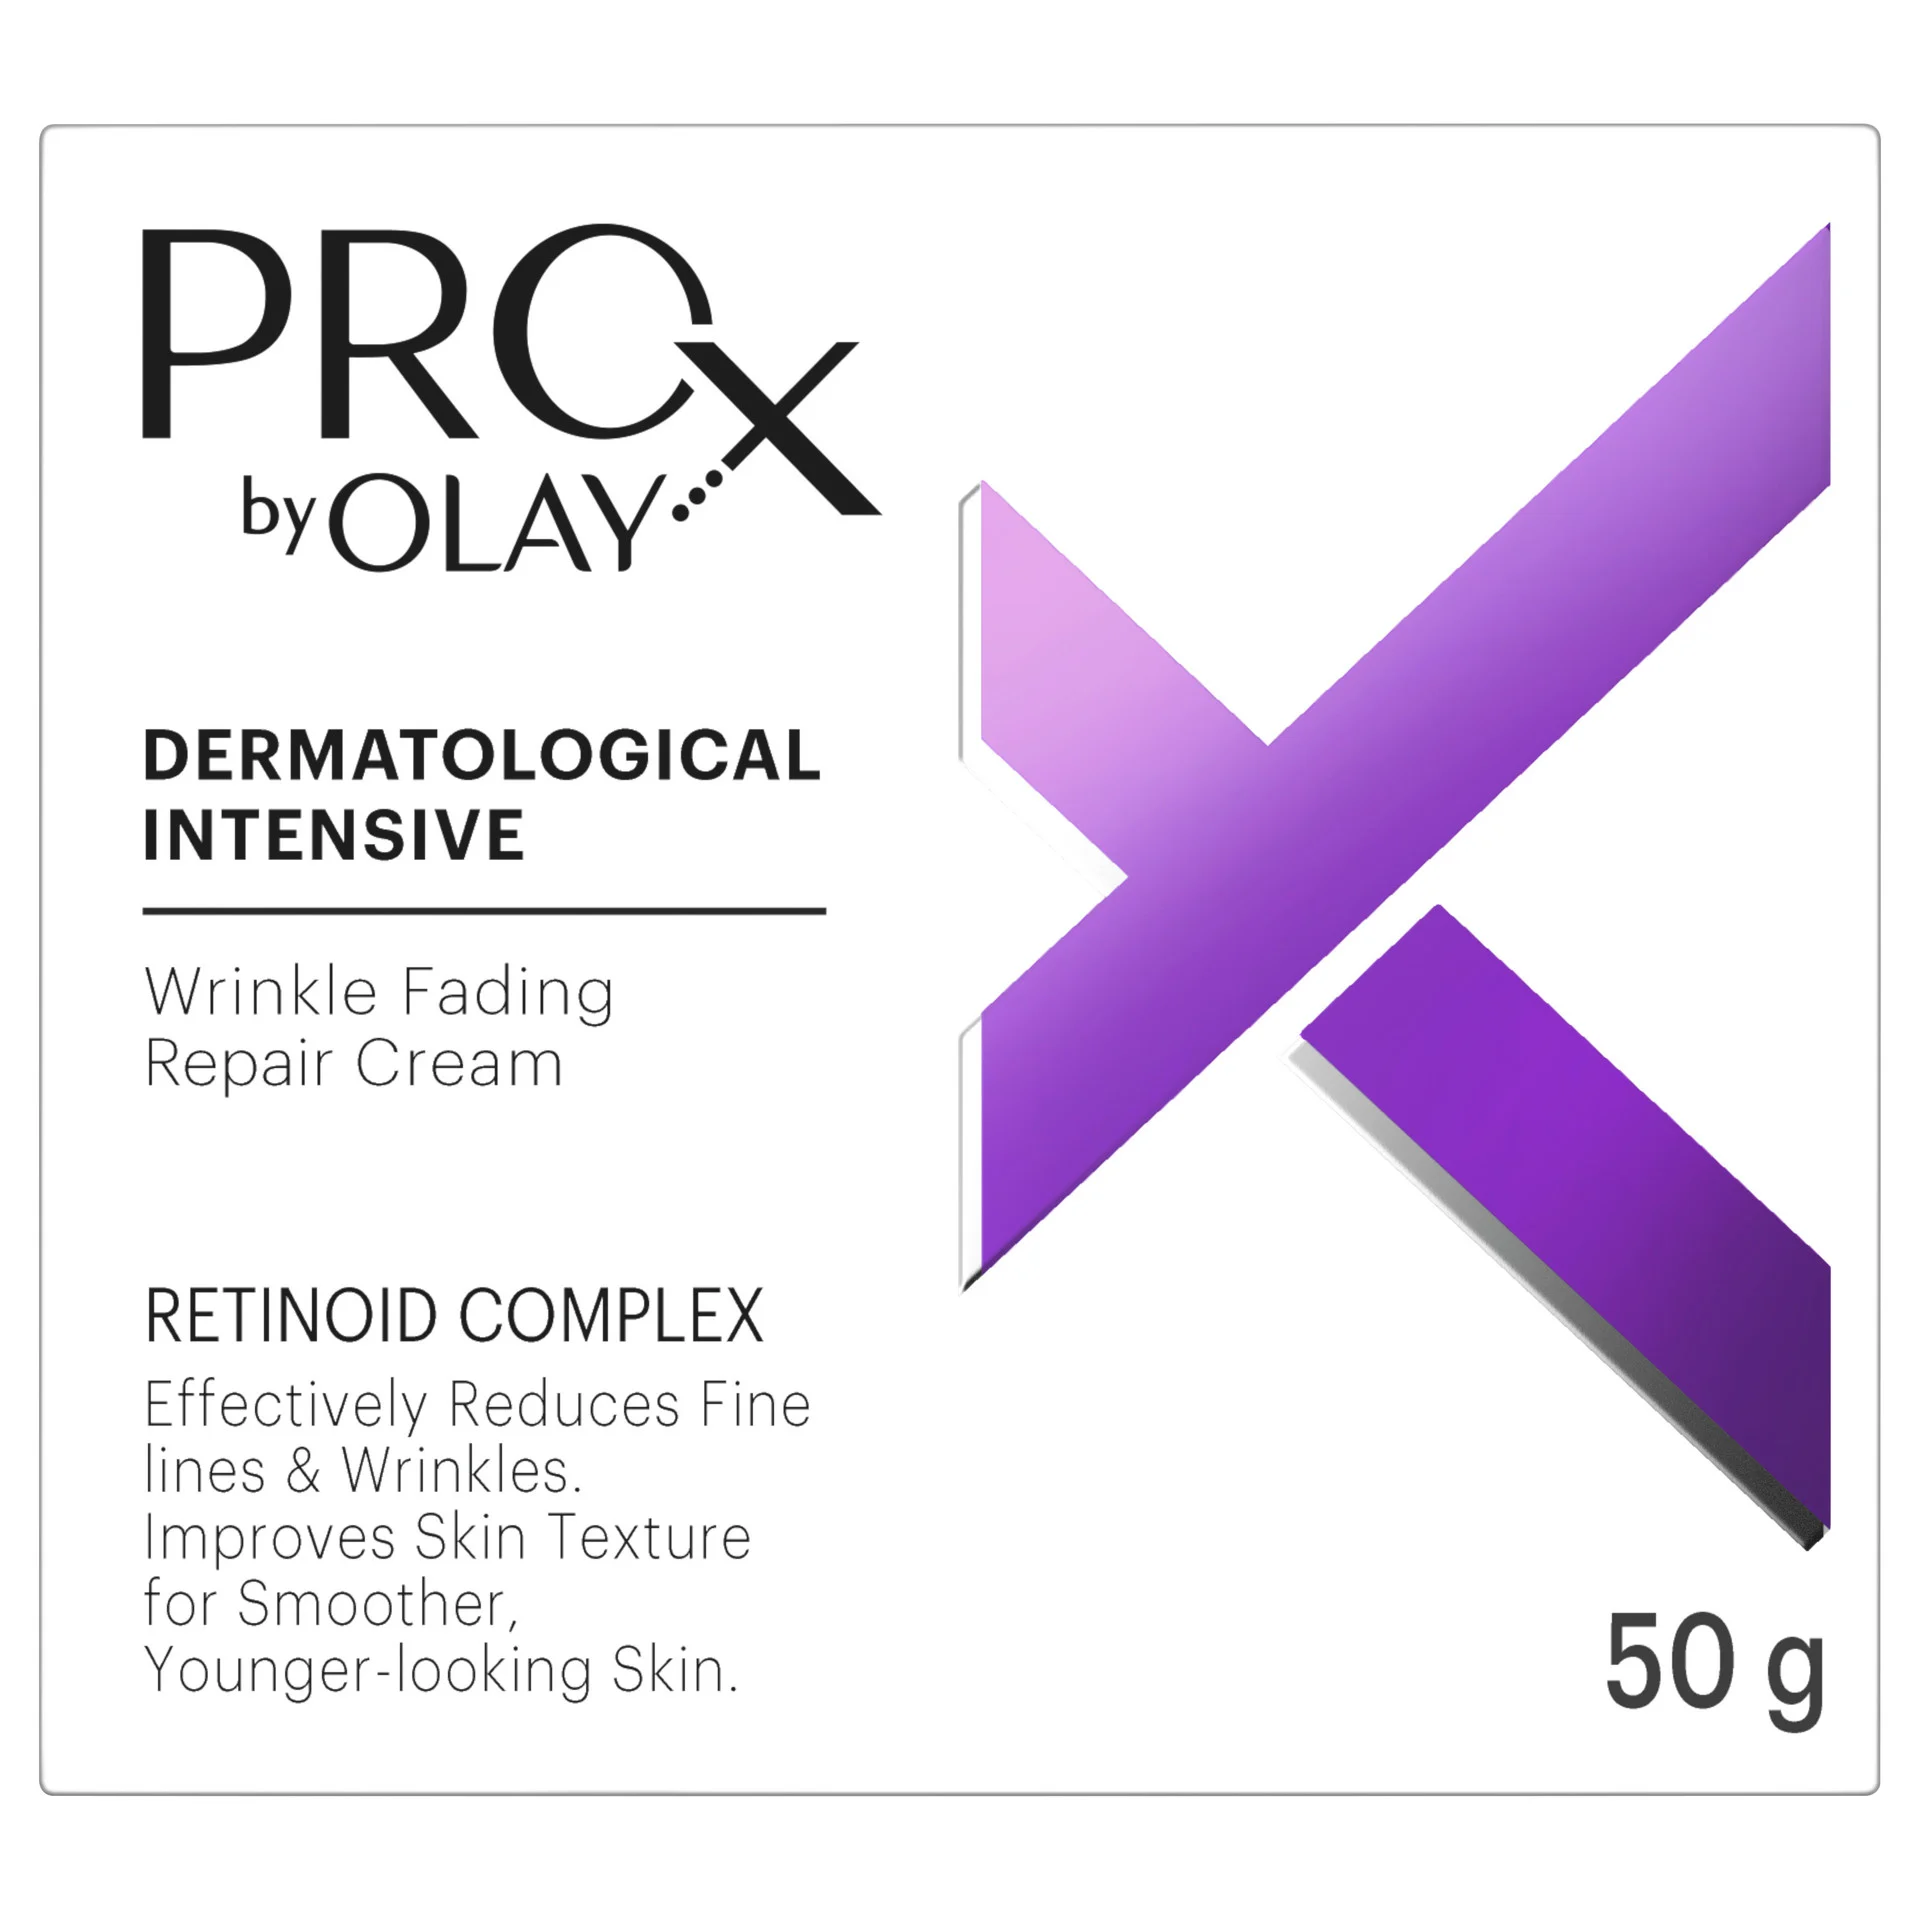 Dermatological Intensive Wrinkle Fading Repair Cream - 50g